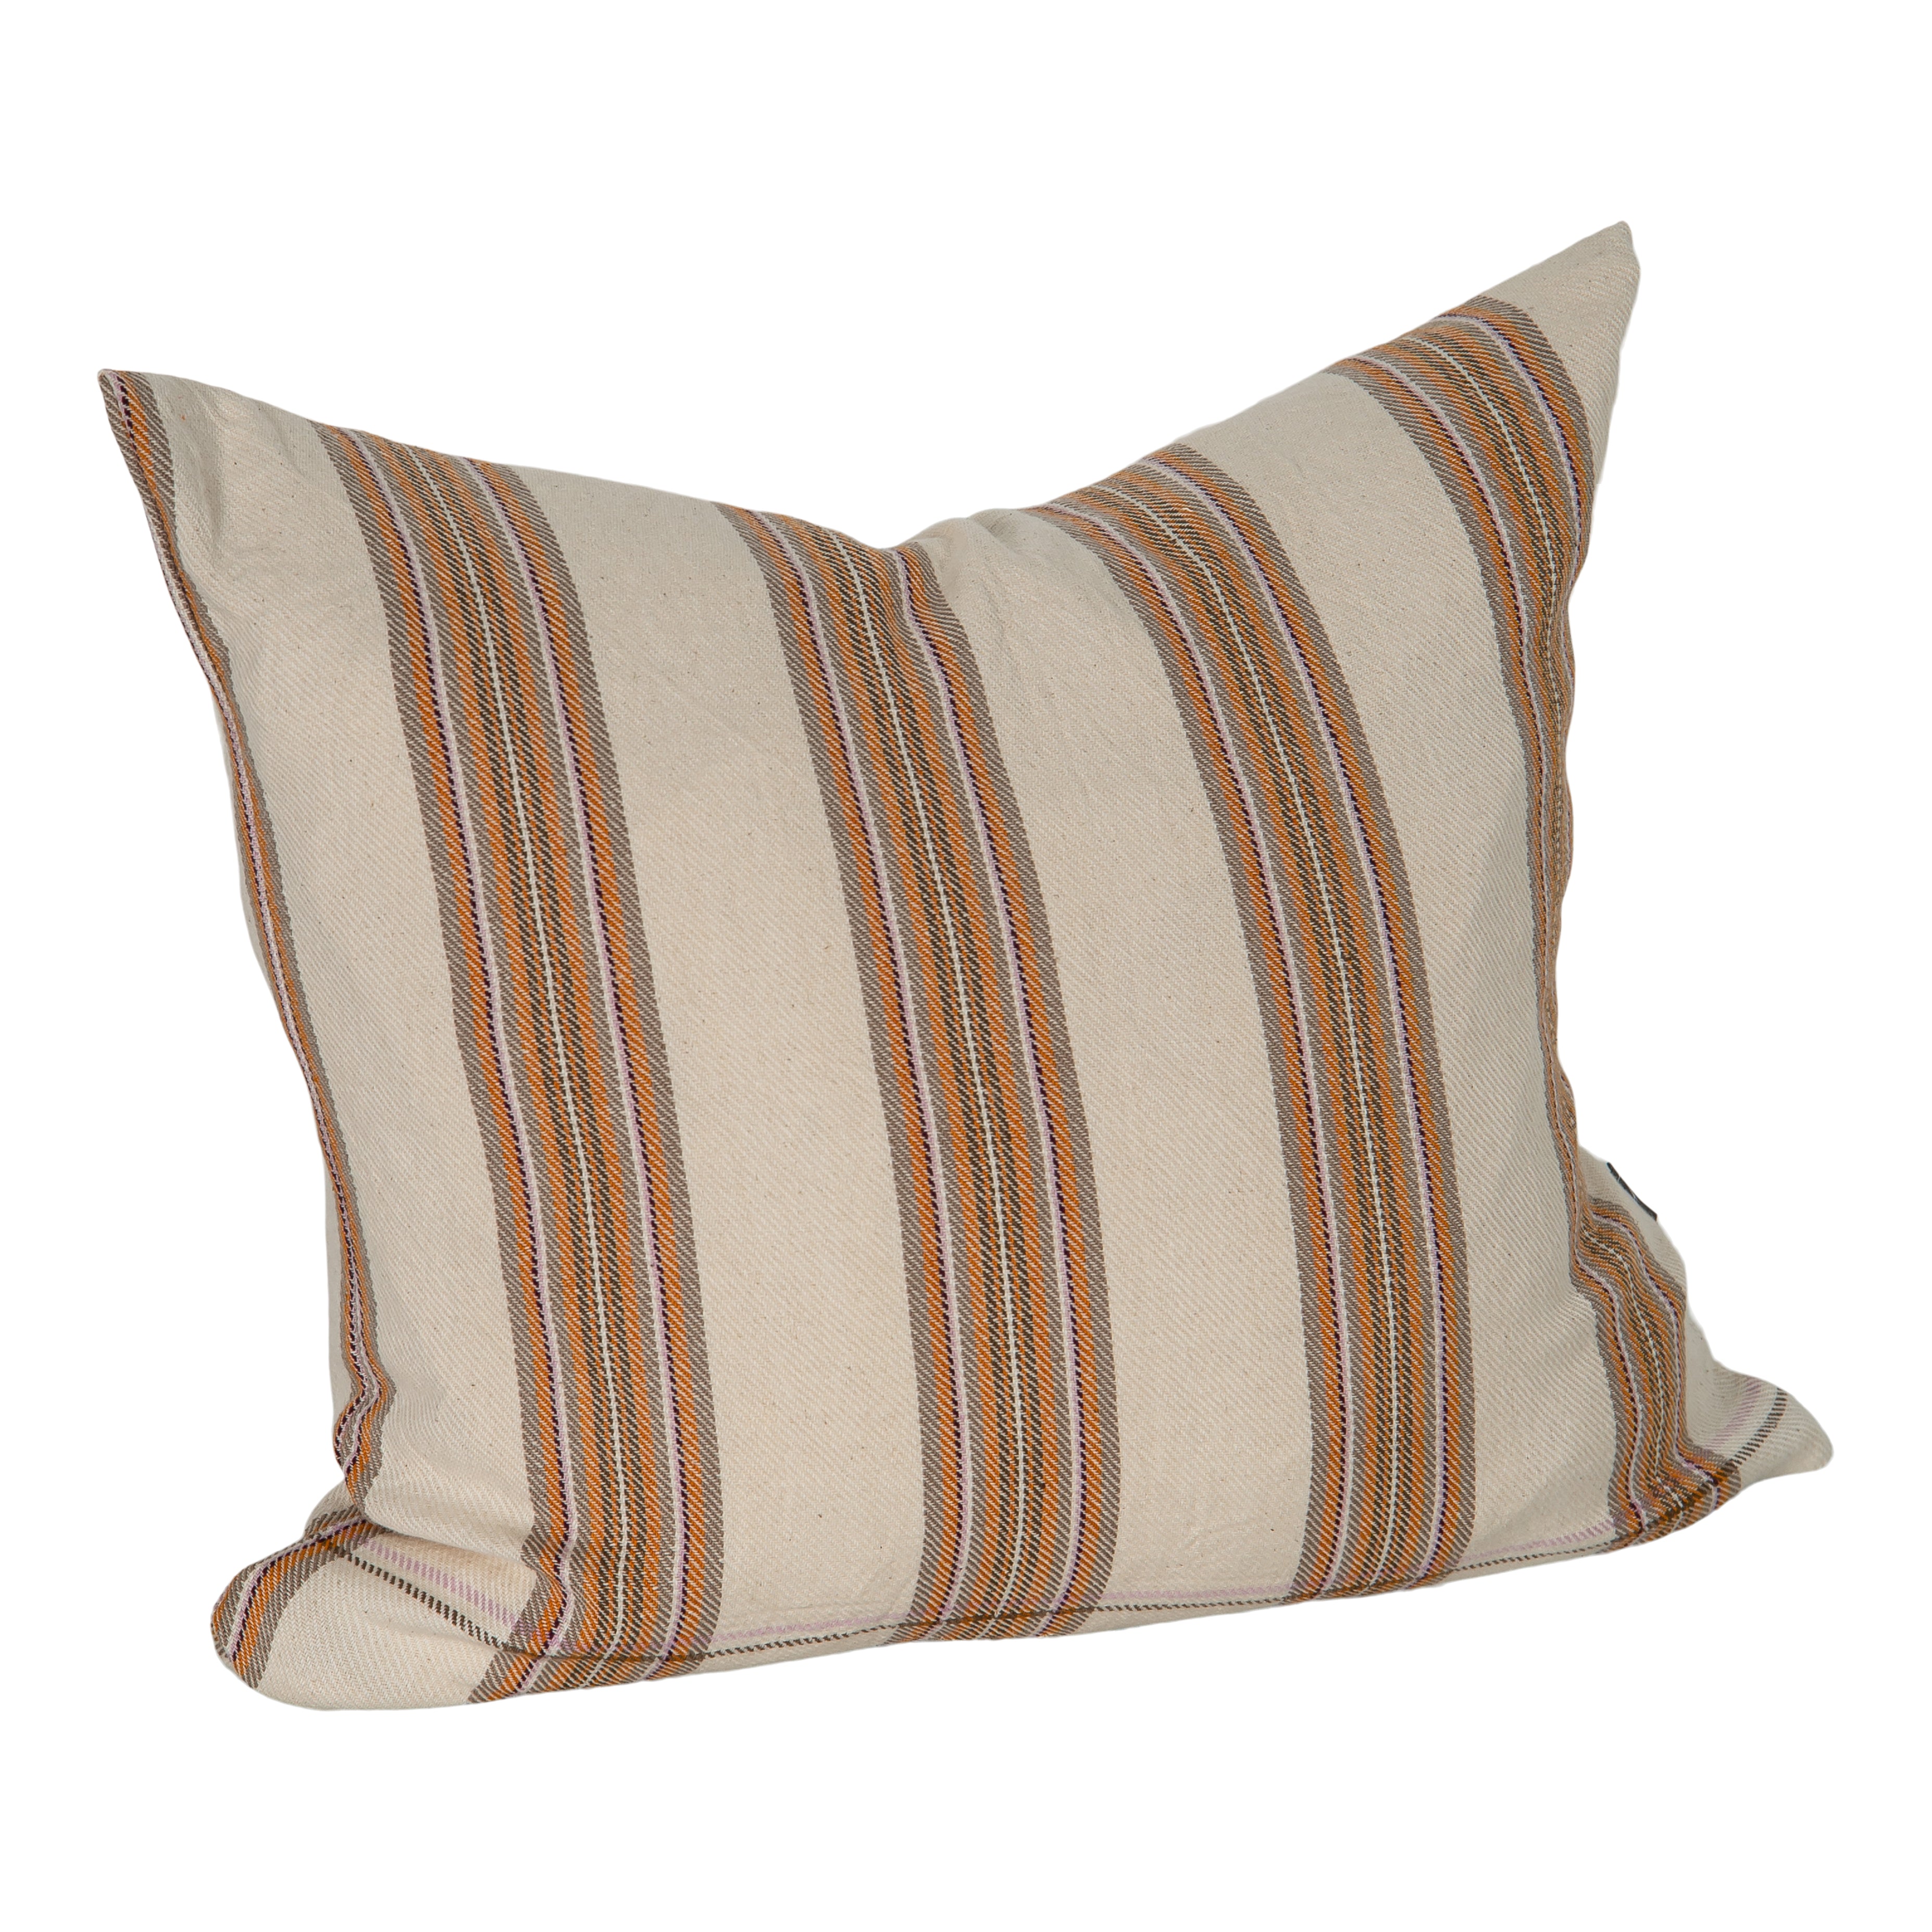 Olida Pillows (Set of 3)